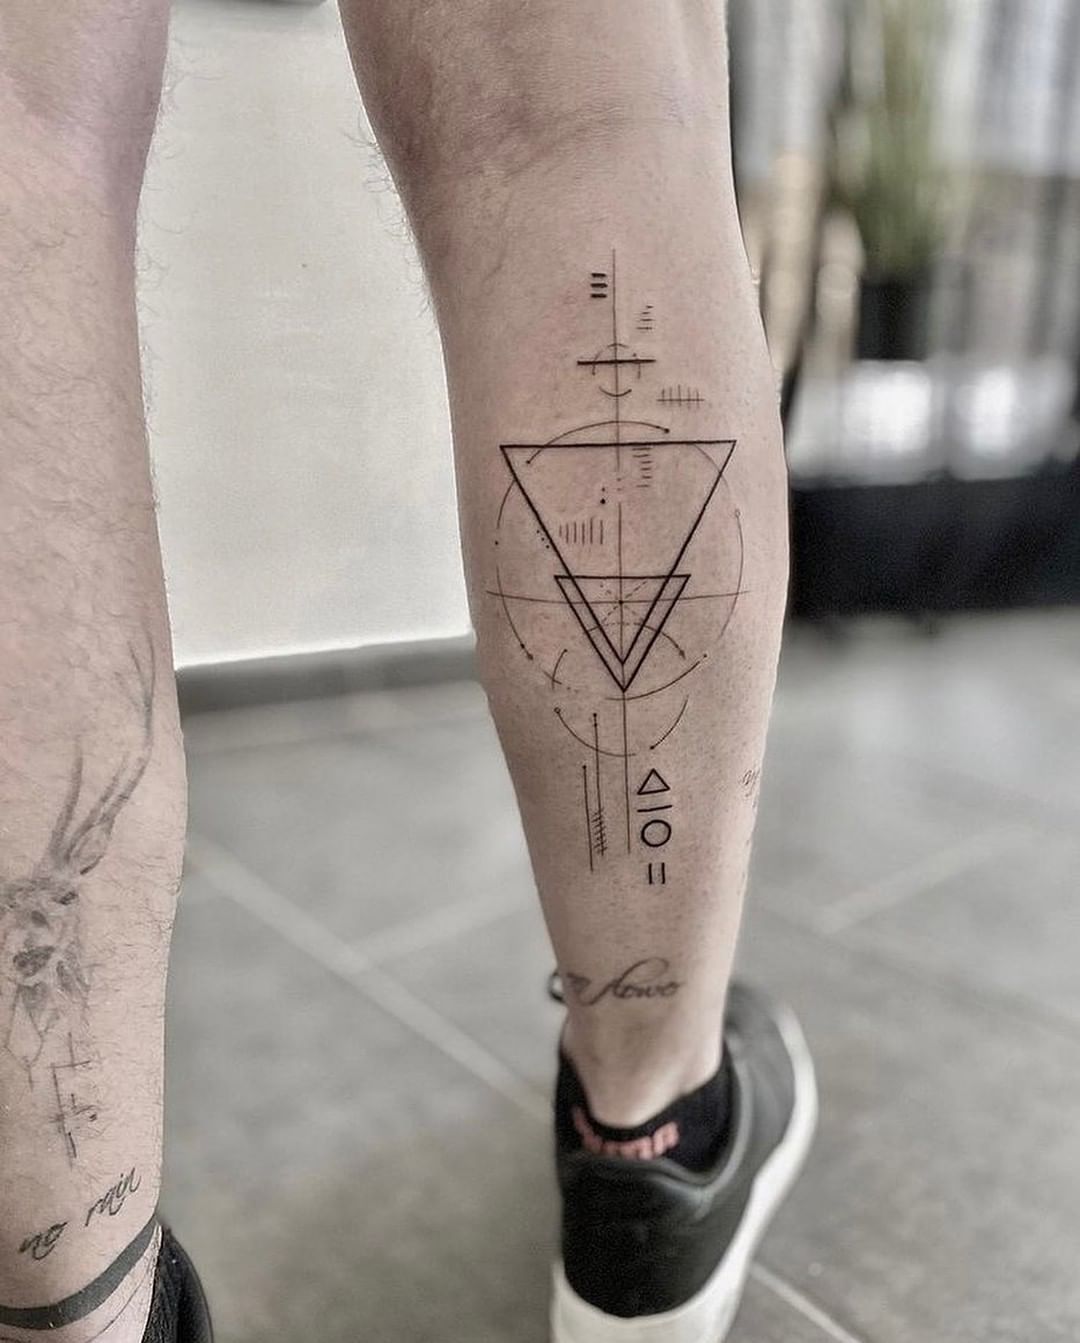 Triangular Prisma Band Tattoo On Arm  Tattoo Ink Master